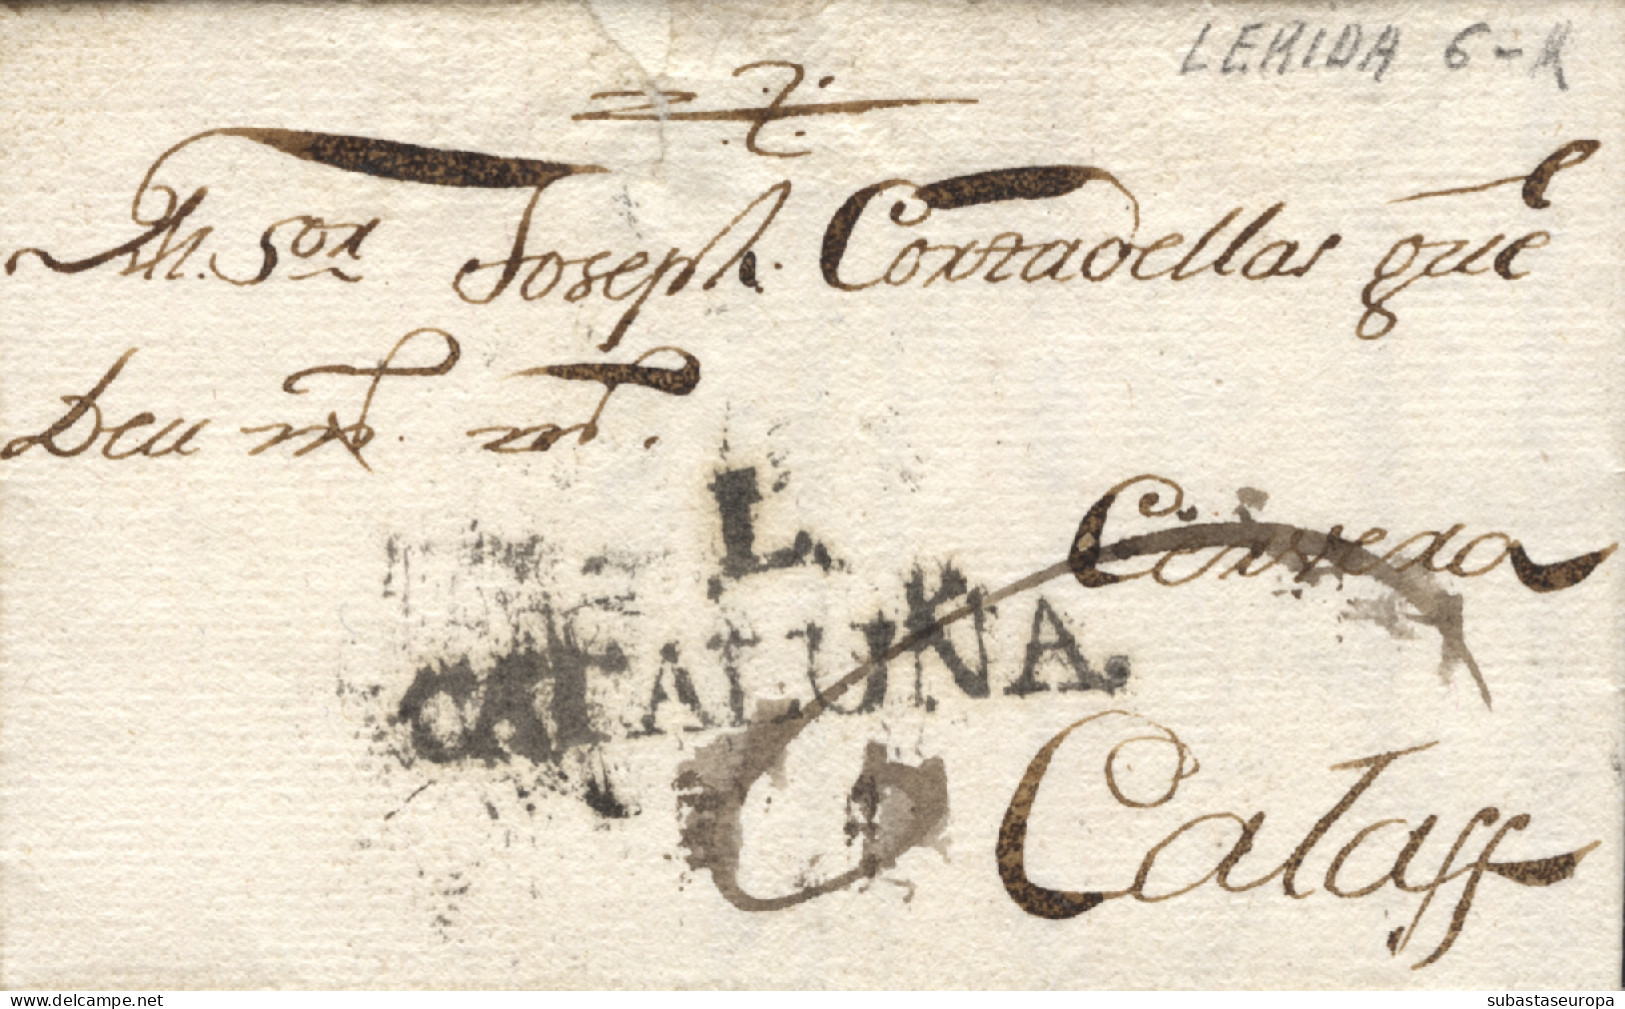 D.P. 5. 1796 (20 MAR). Carta De Corbins A Calaf. Marca Parecida A La Nº 7N De Lleida Pero Con Otra Tipografía  - ...-1850 Préphilatélie